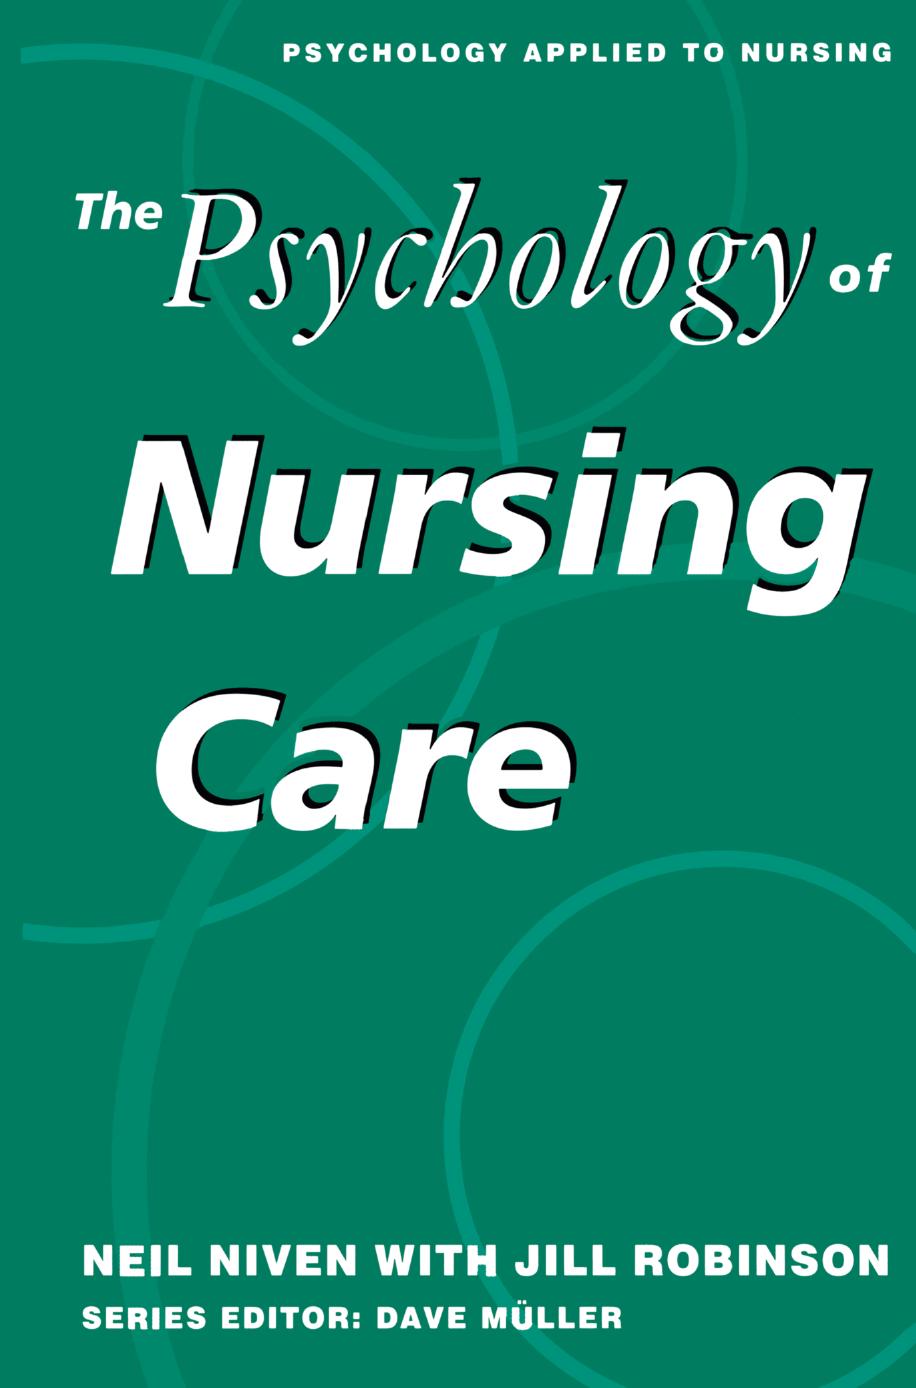 The psychology of nursing care (1994)